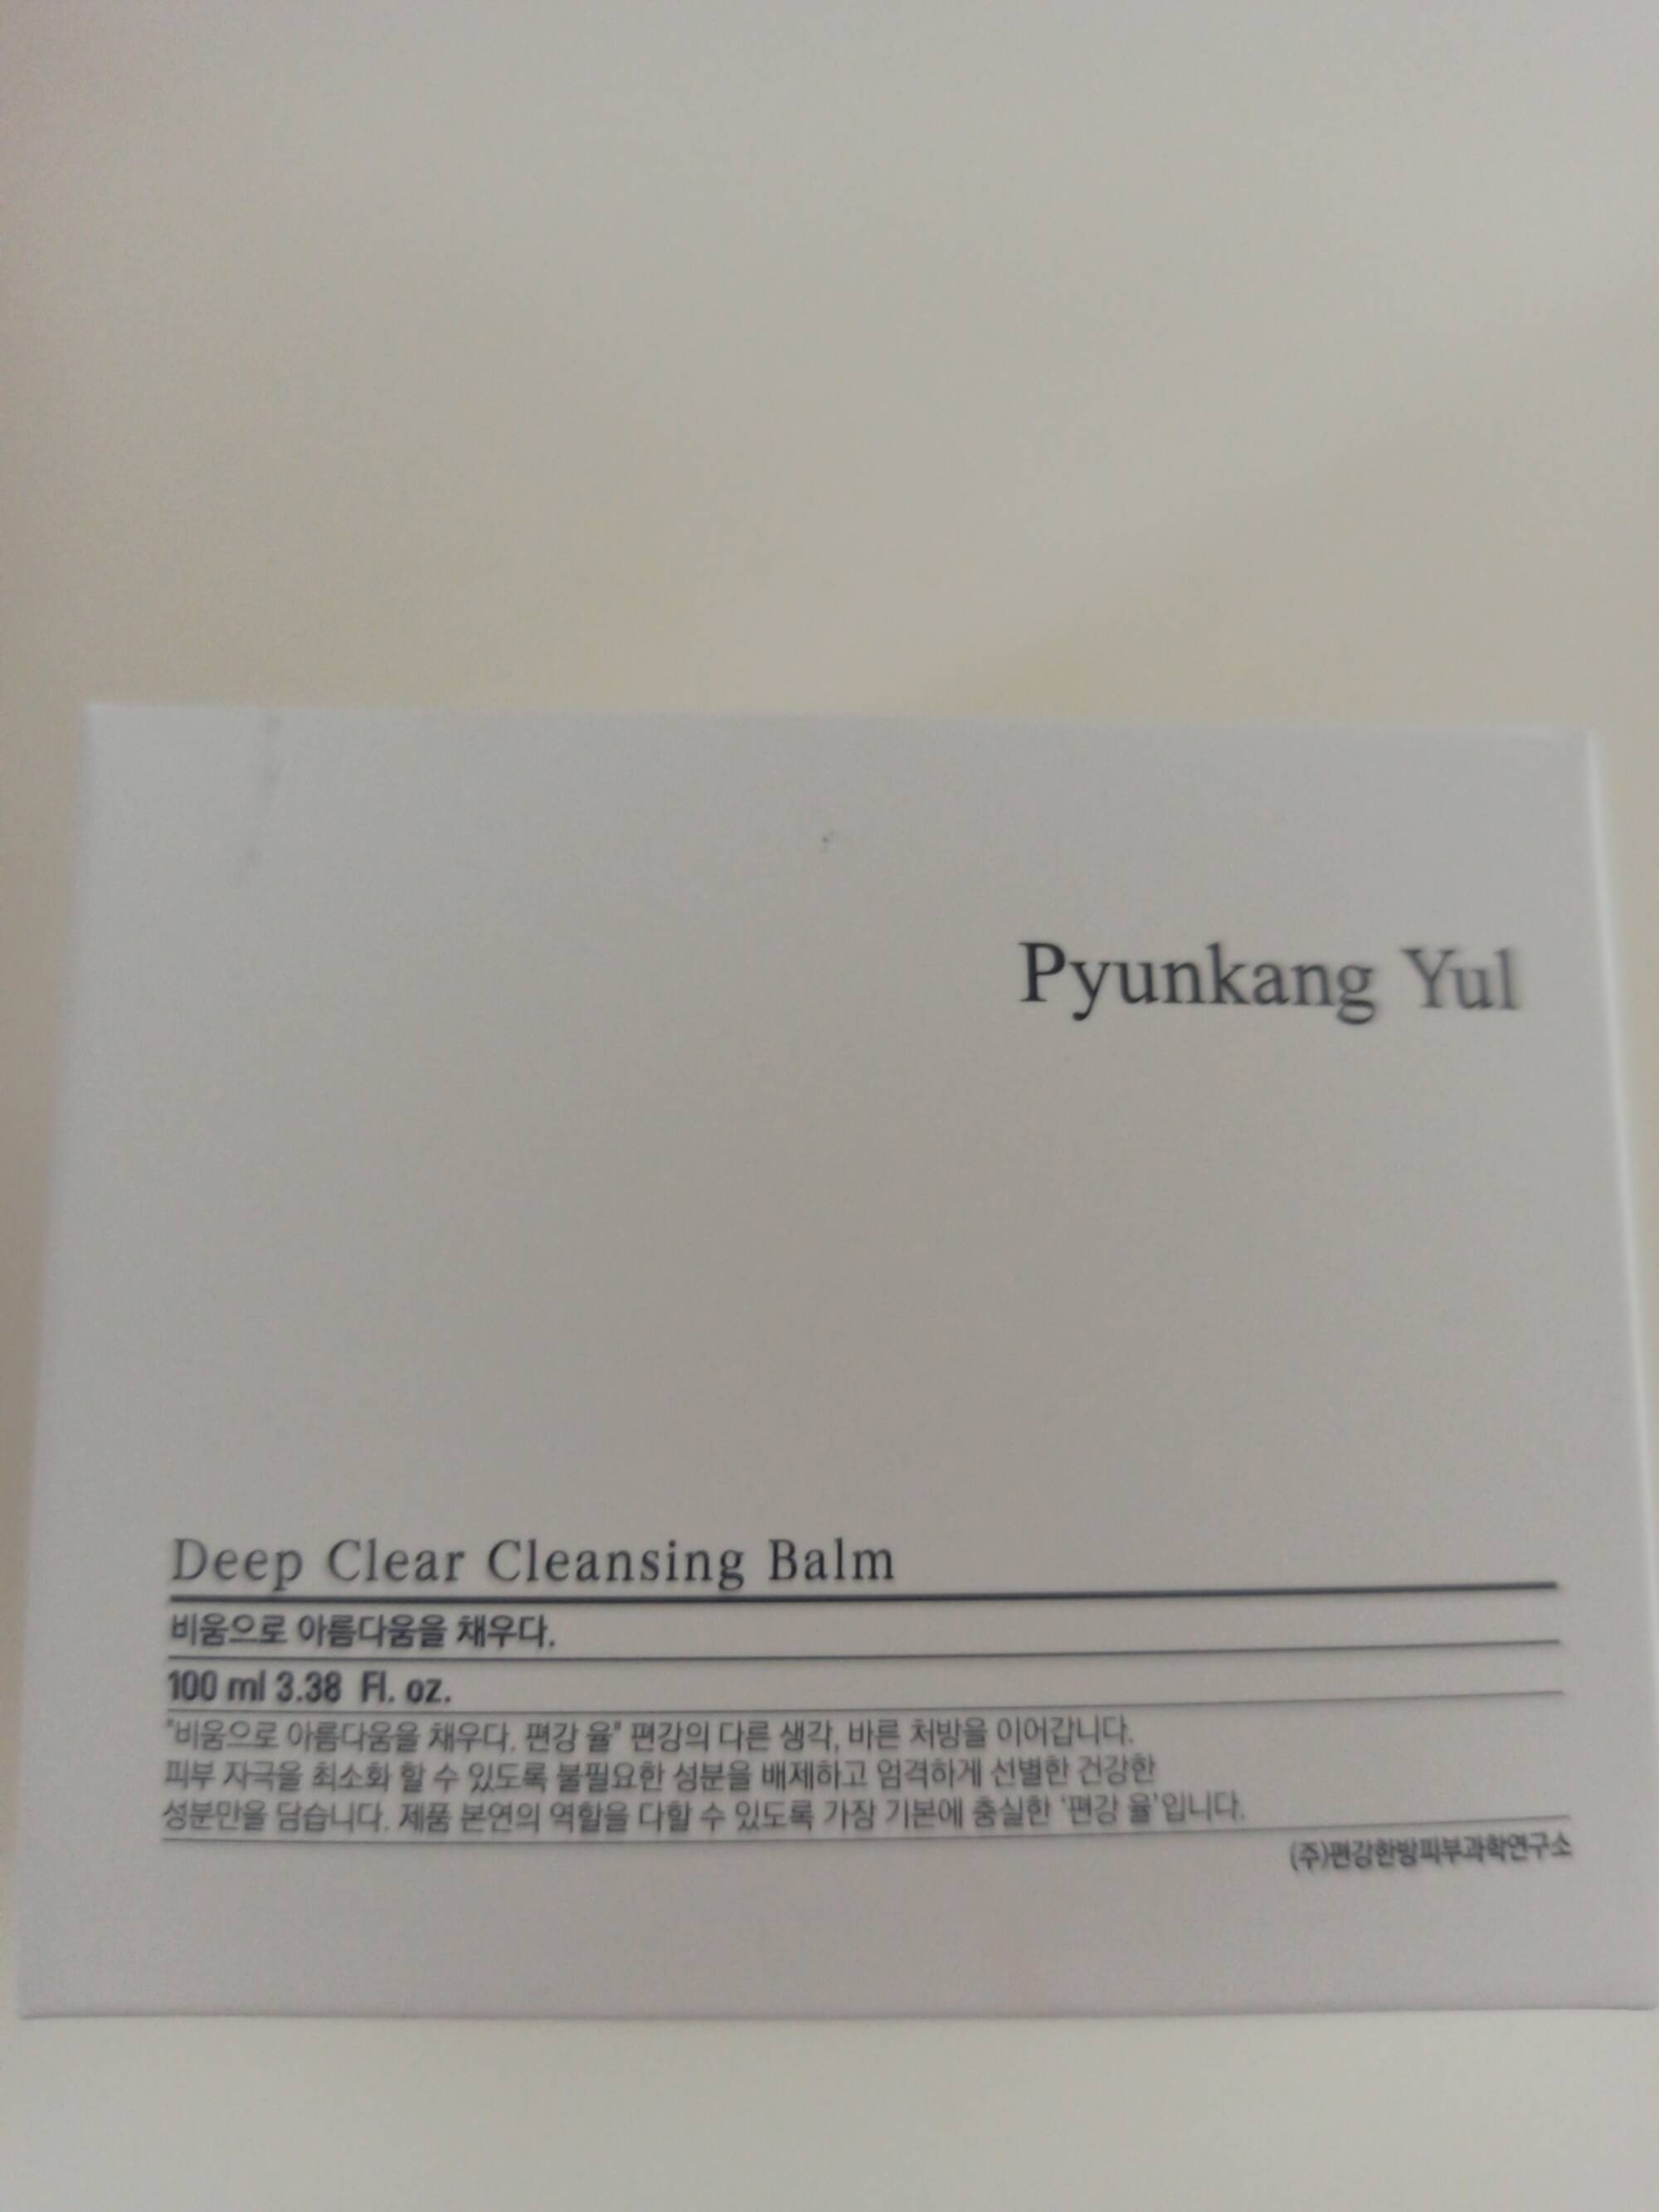 PYUNKANG YUL - Deep clear cleansing balm